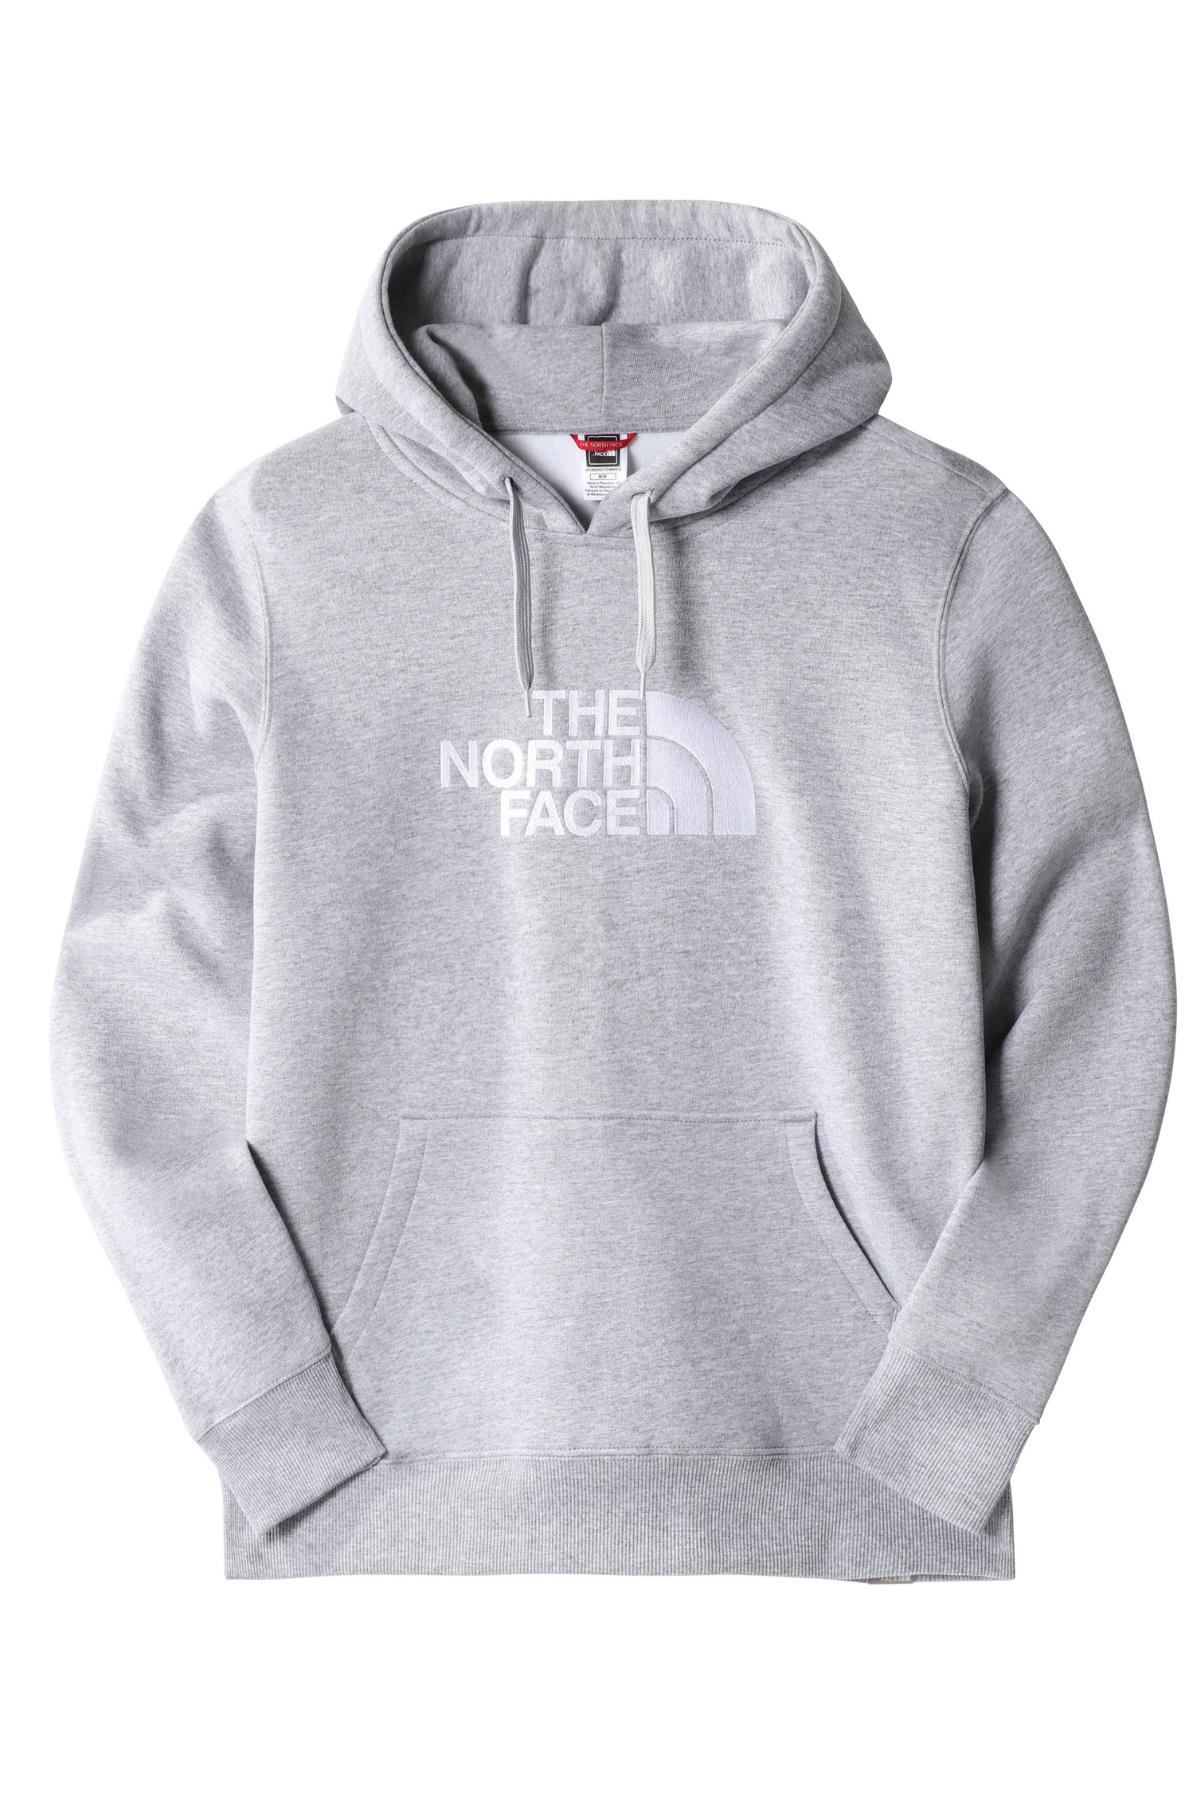 The North Face Drew Peak Pullover Hoodie Kapüşonlu Kadın Sweatshirt Gri